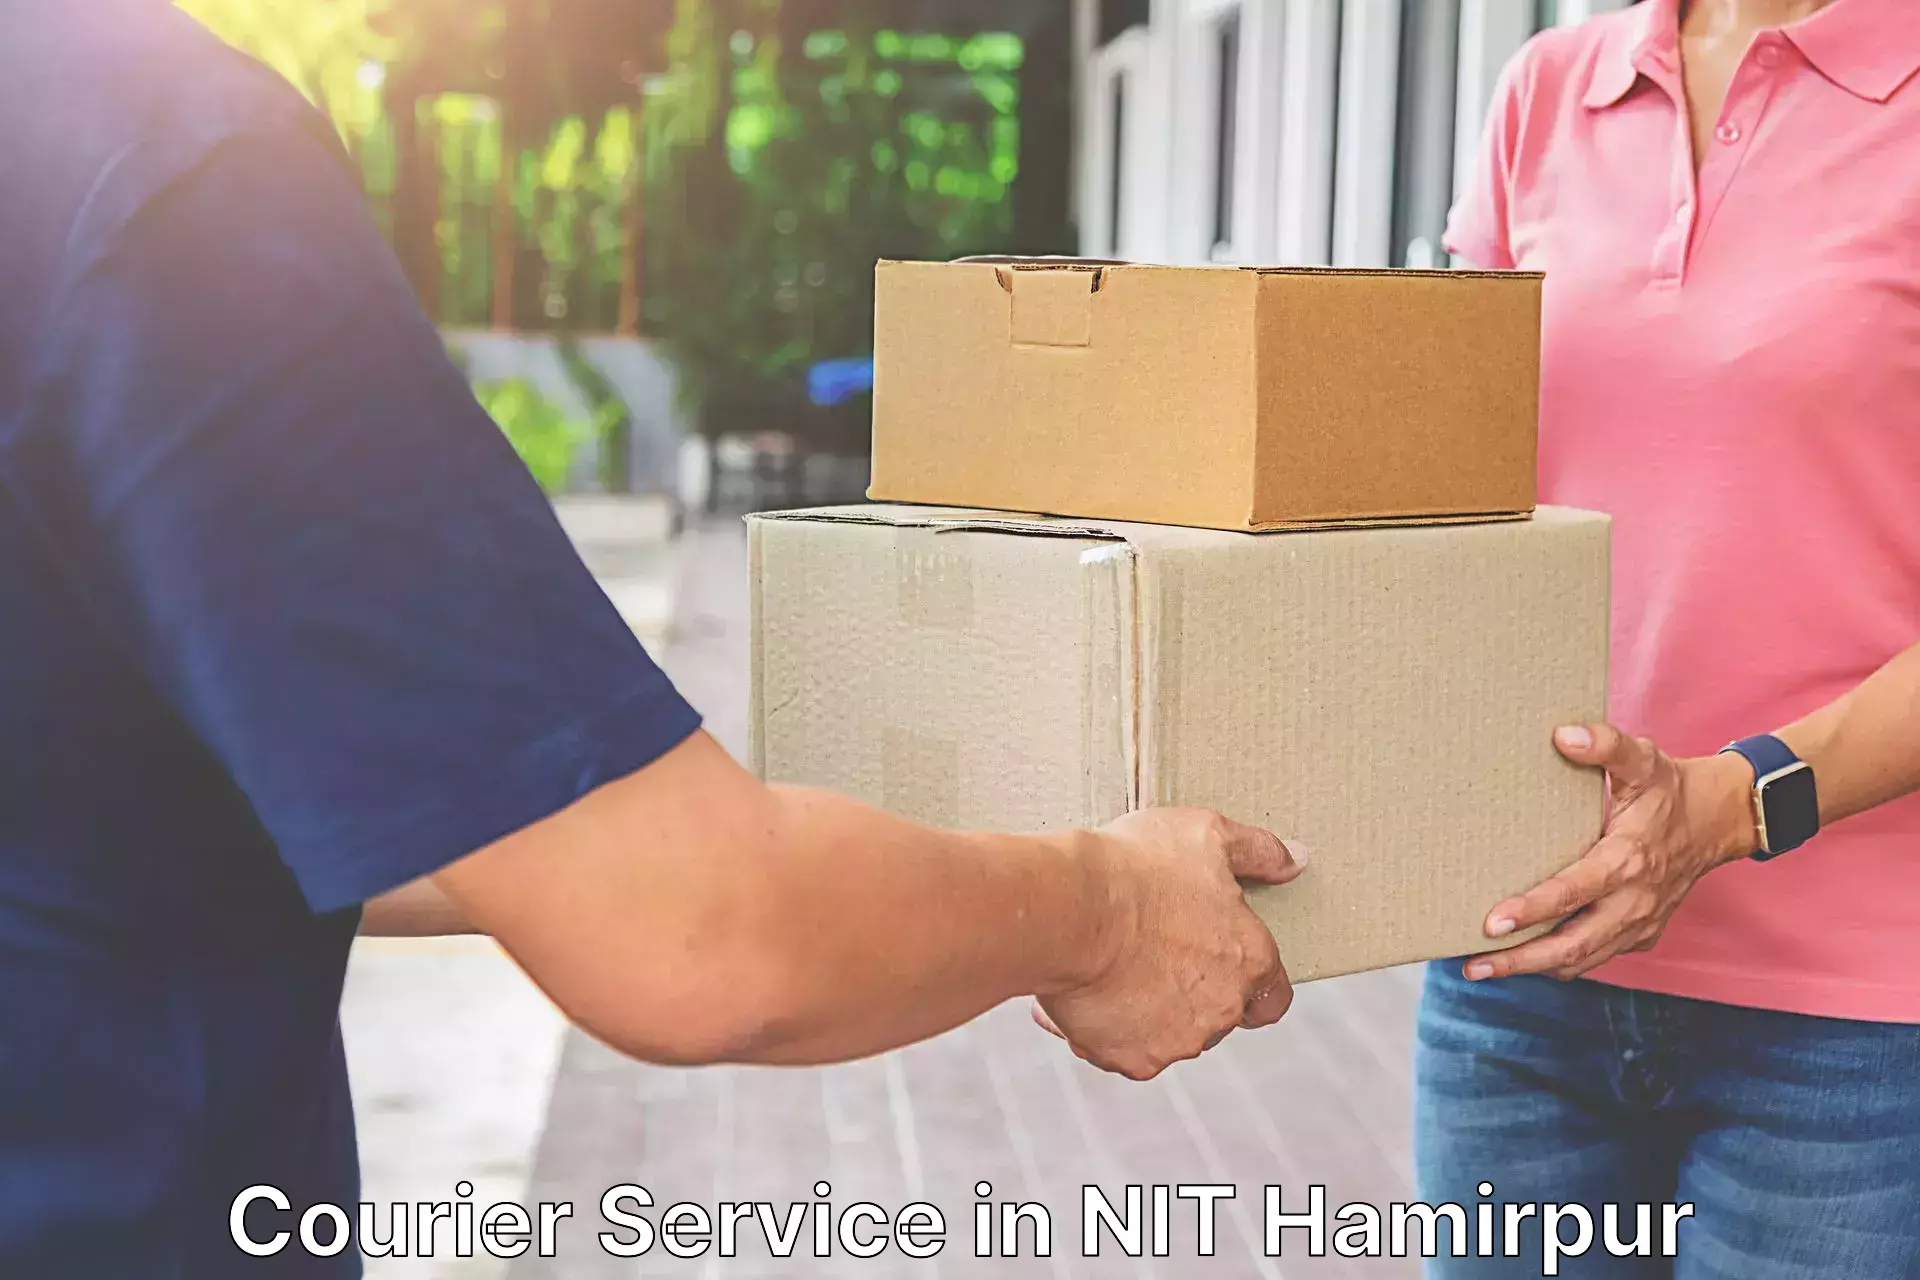 Logistics efficiency in NIT Hamirpur